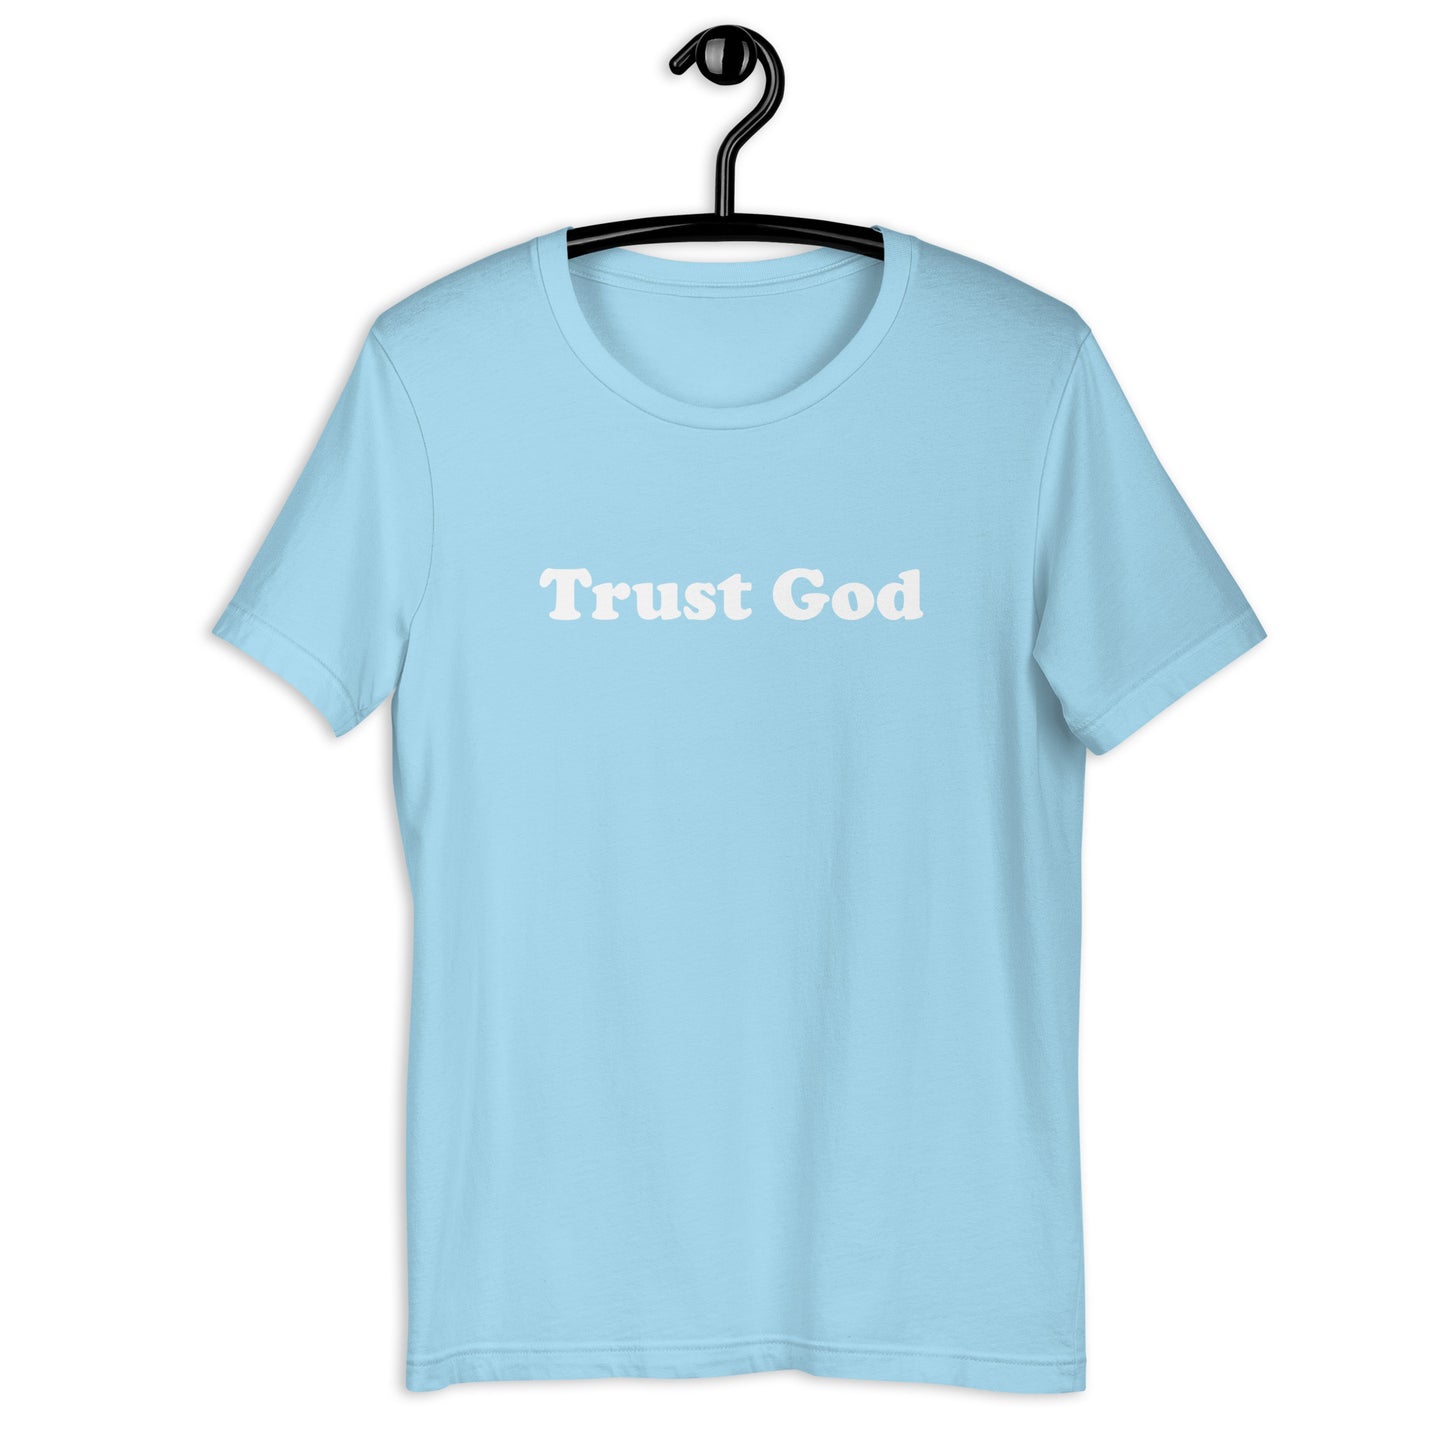 Trust God T shirt